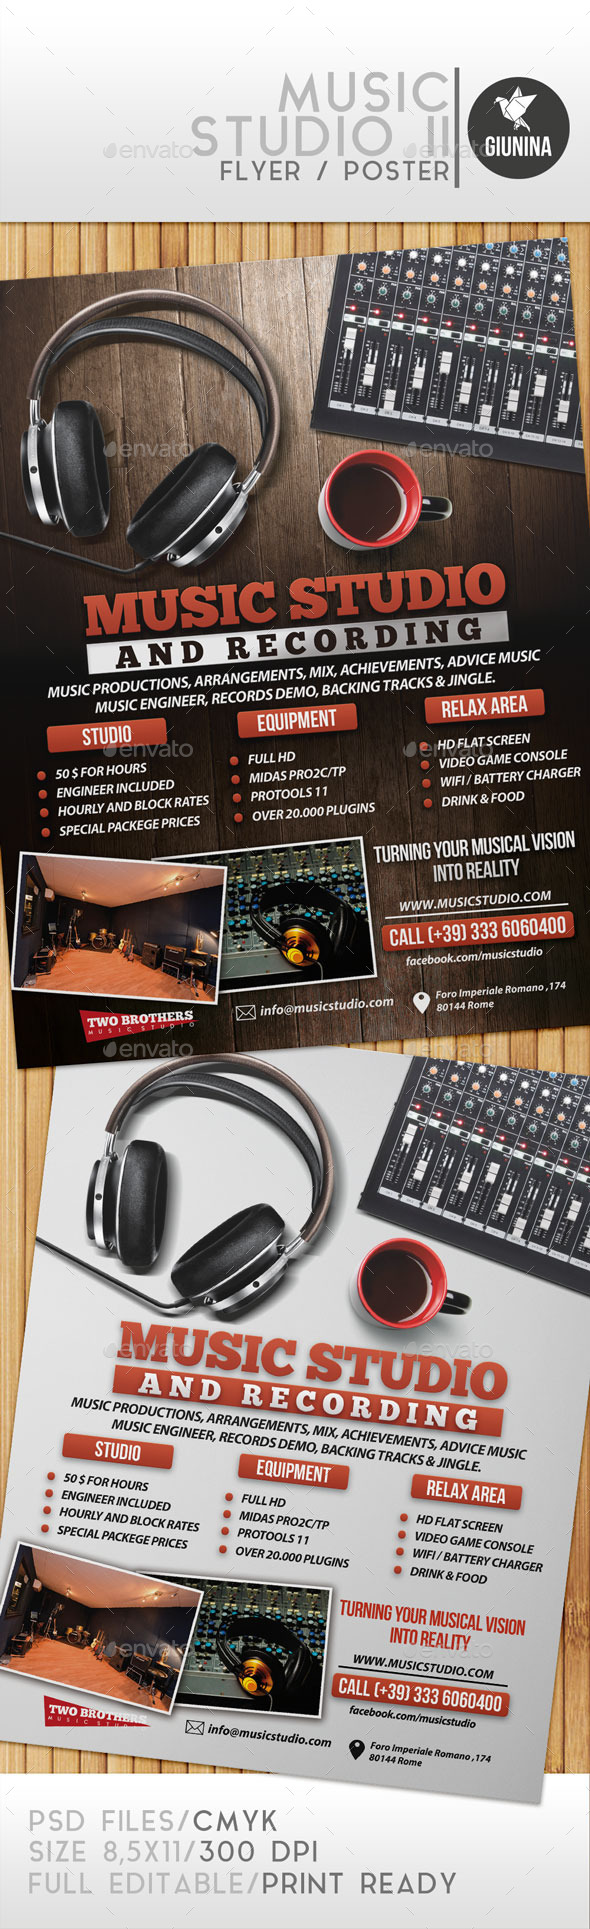 Music Studio II Flyer/Poster (Commerce)